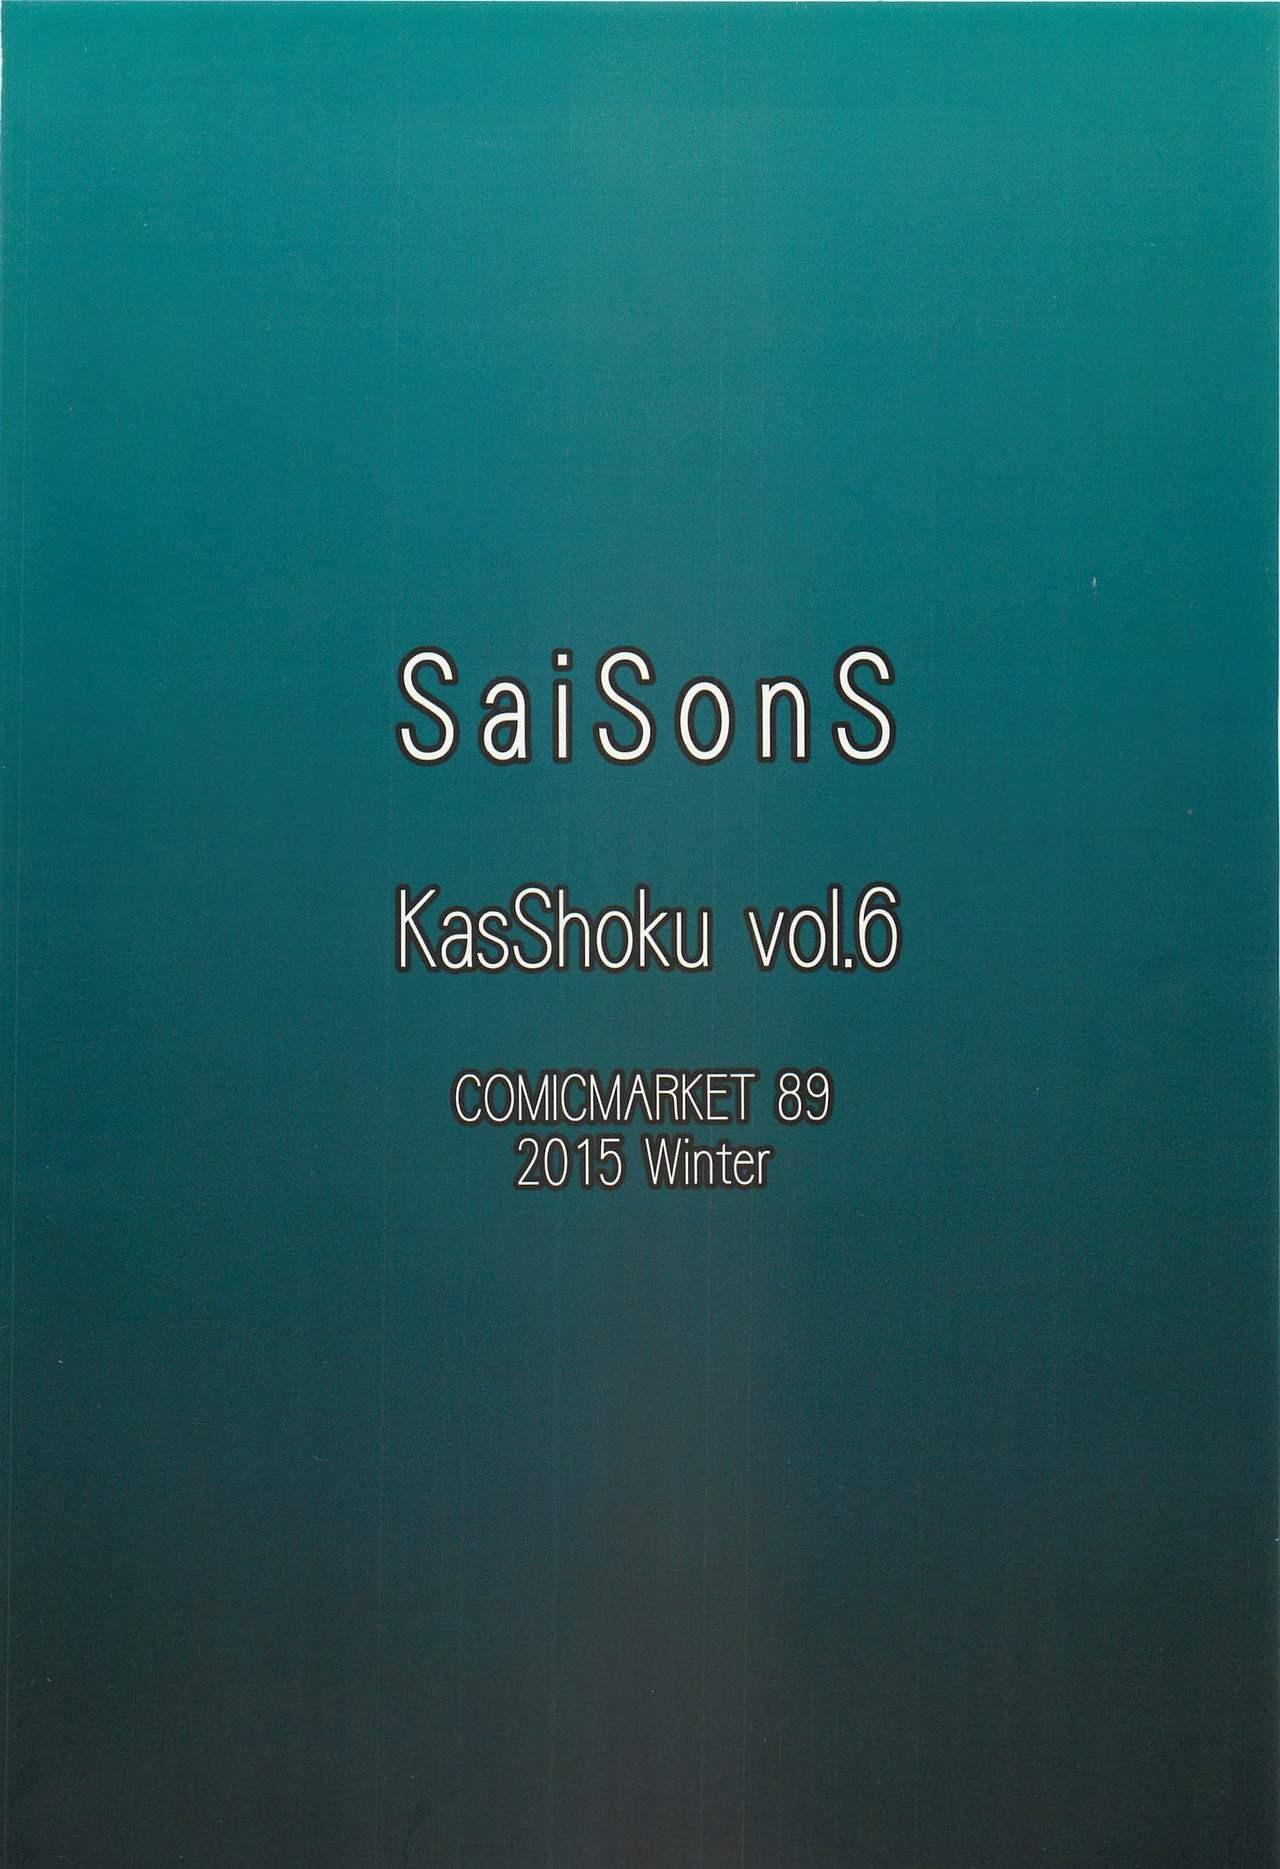 Kasshoku Vol. 6 16